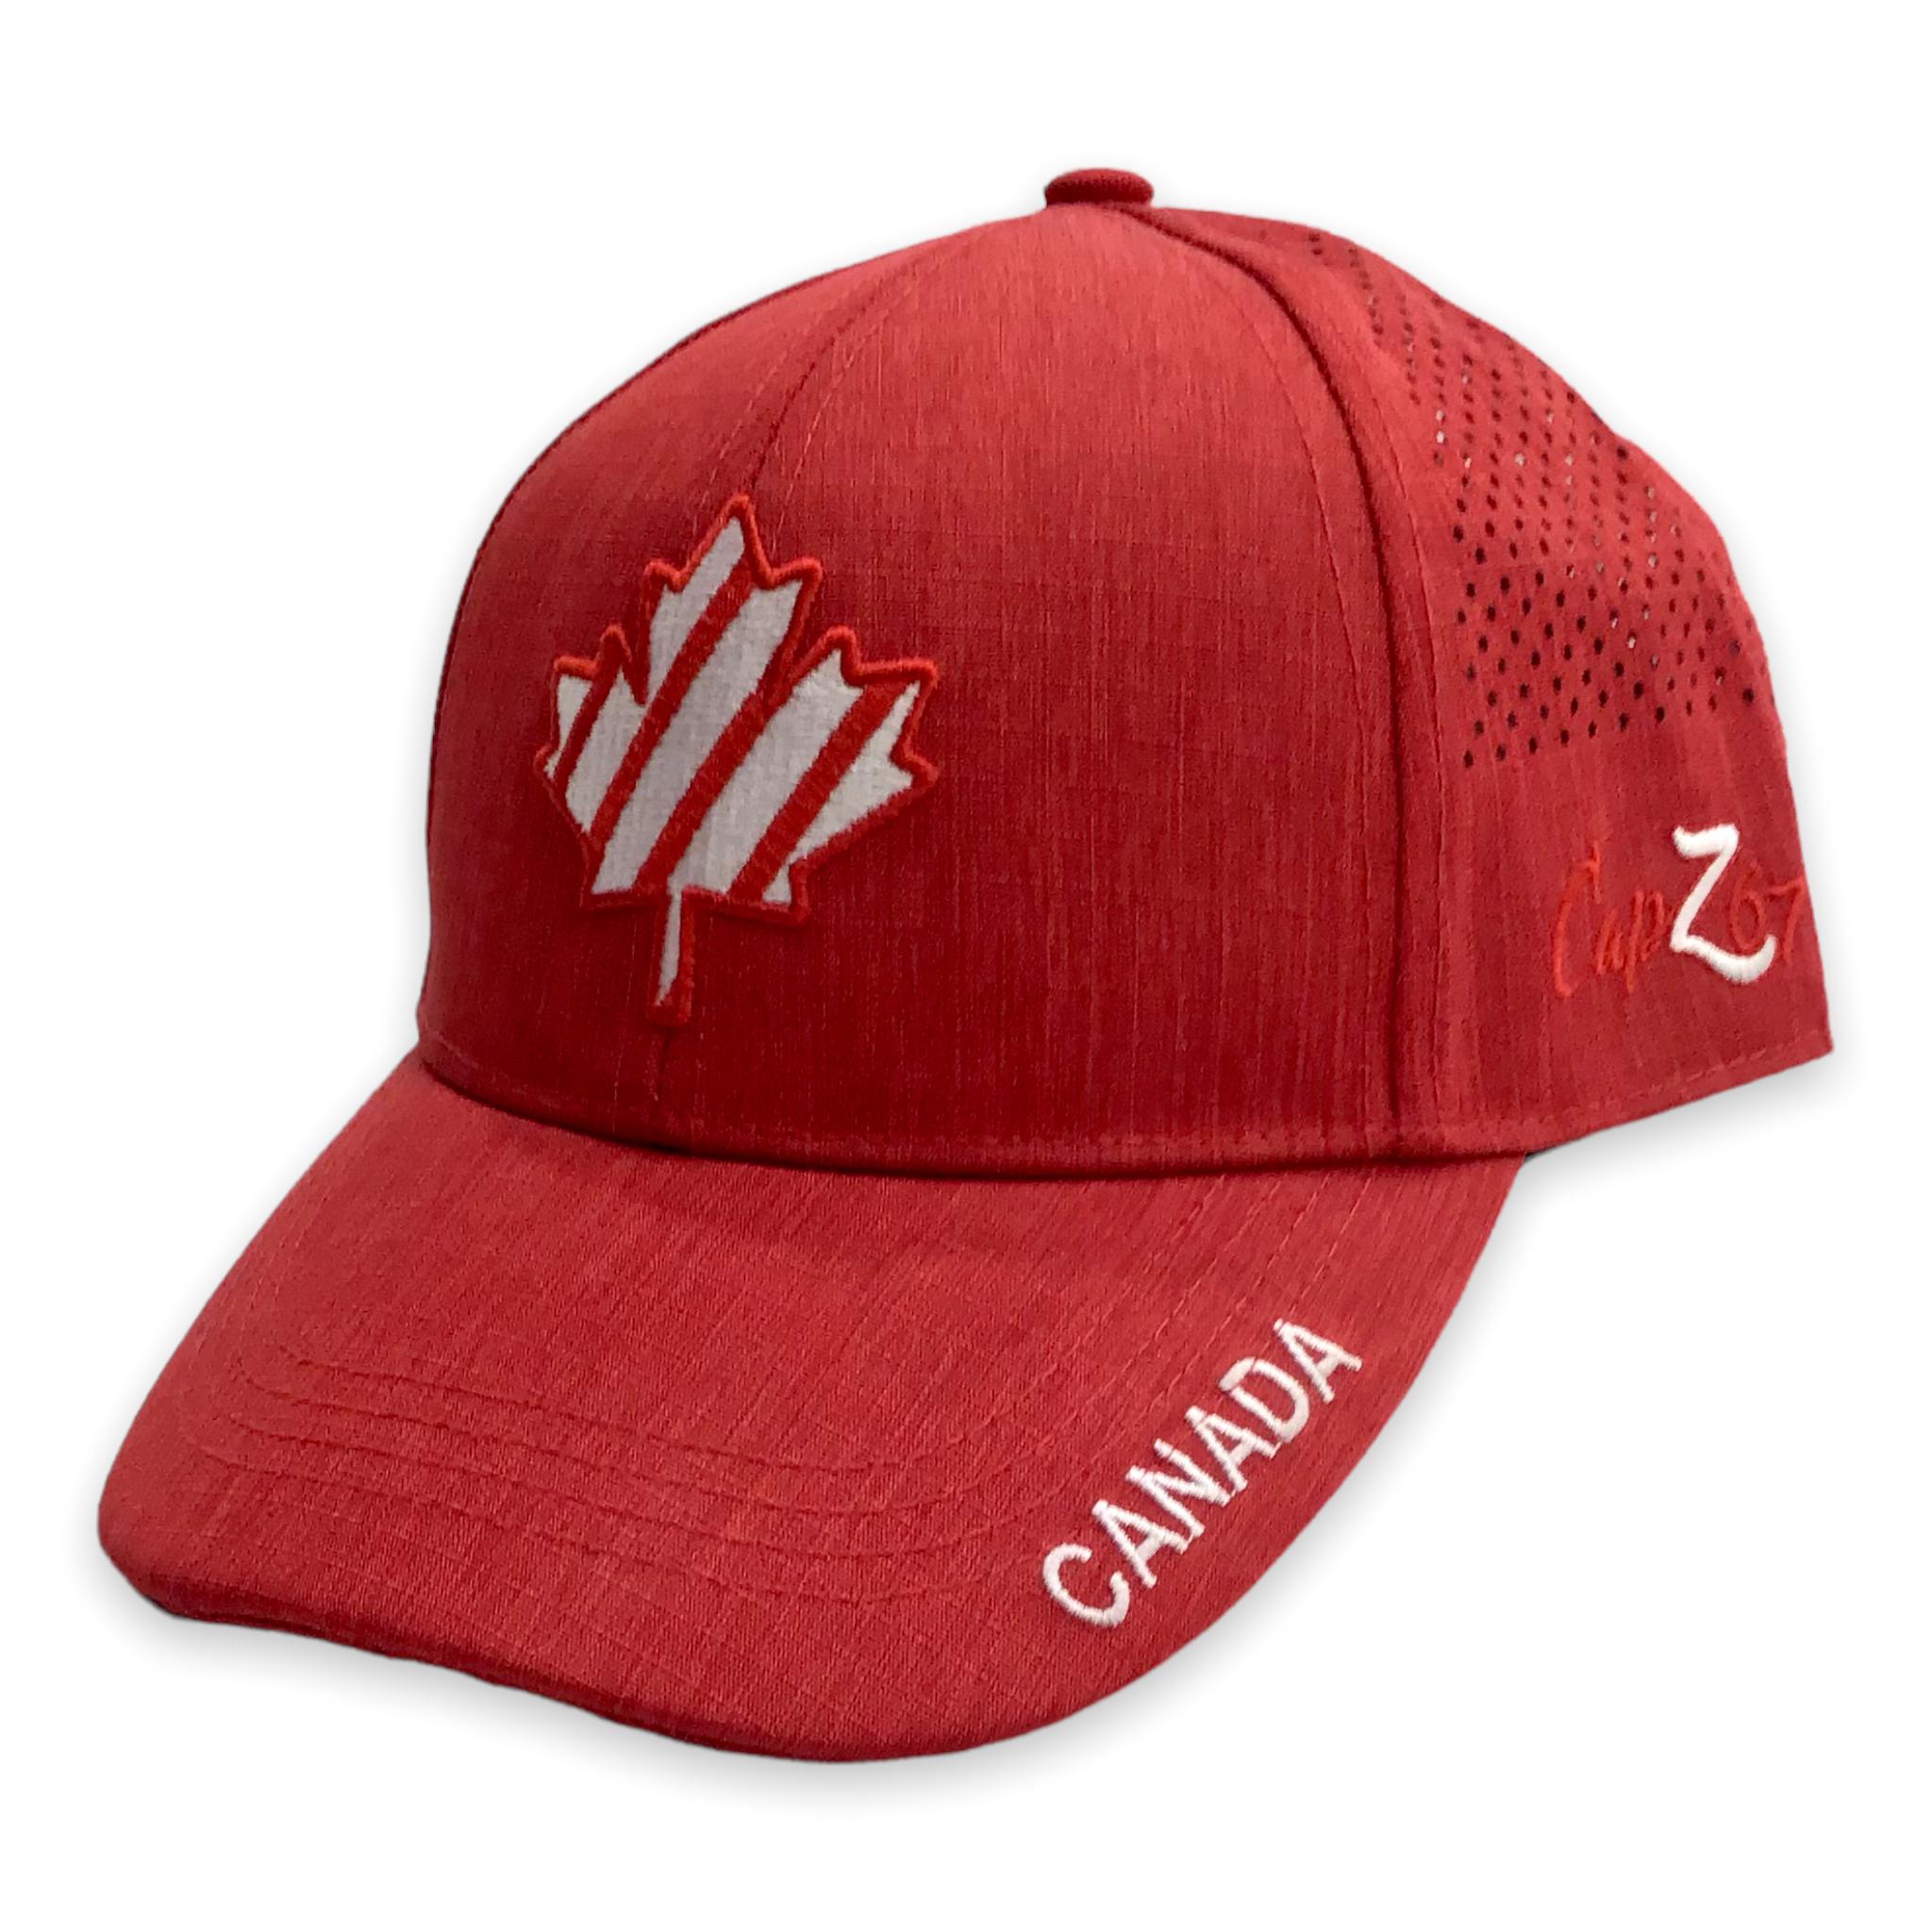 Red Baseball Cap - Canada Maple Leaf Striped Adjustable Mesh Hat